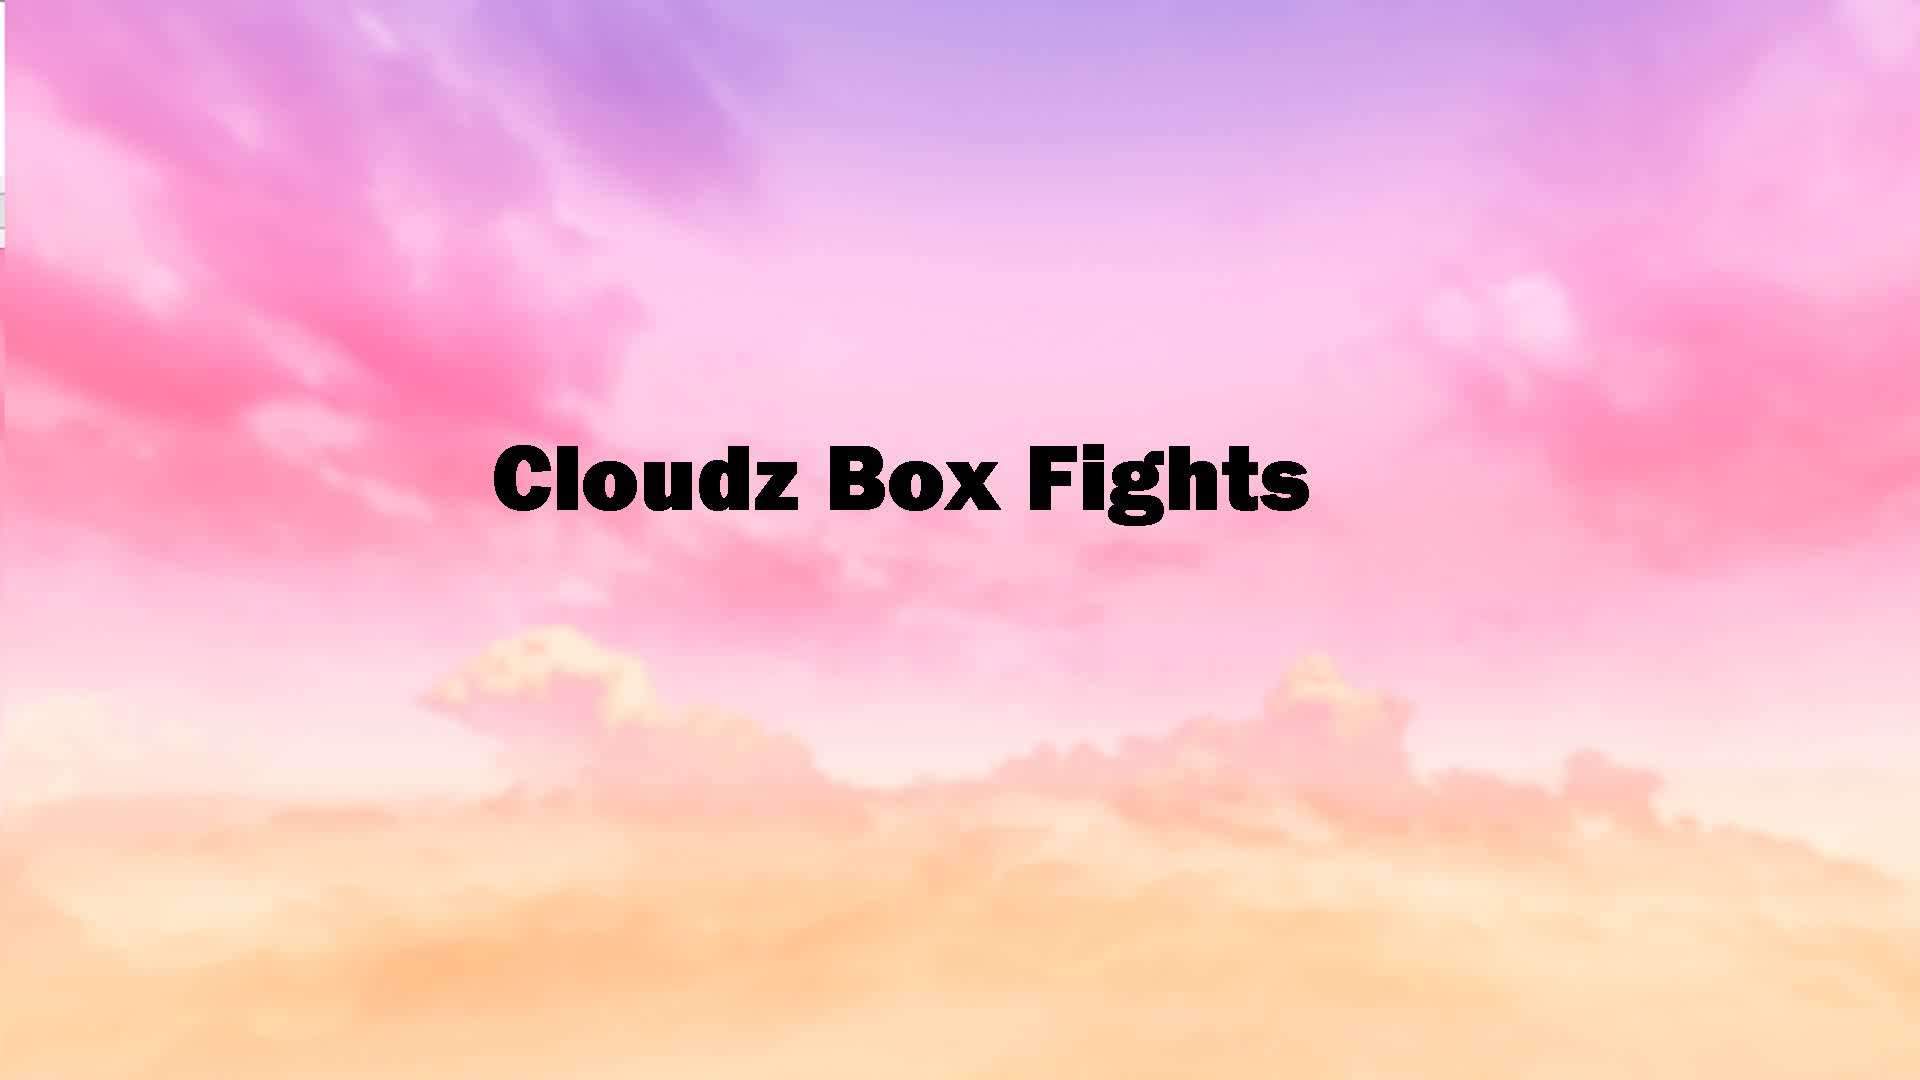 CLOUDZ BOX FIGHTS